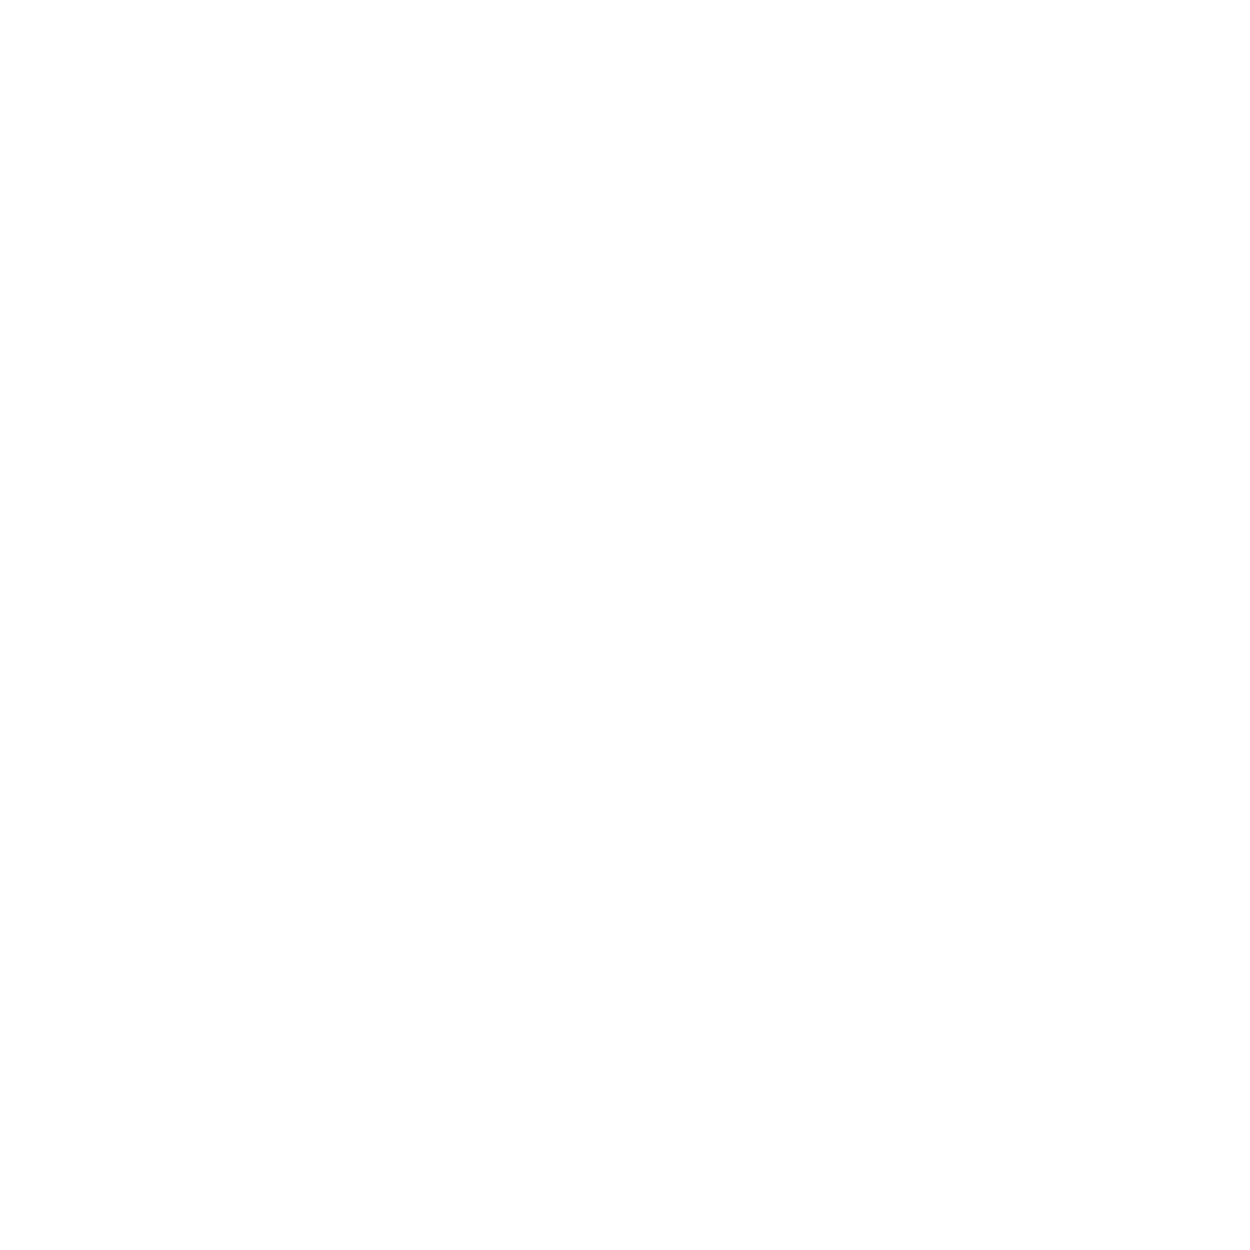 TORQUE-TECH PRECISION CO., LTD